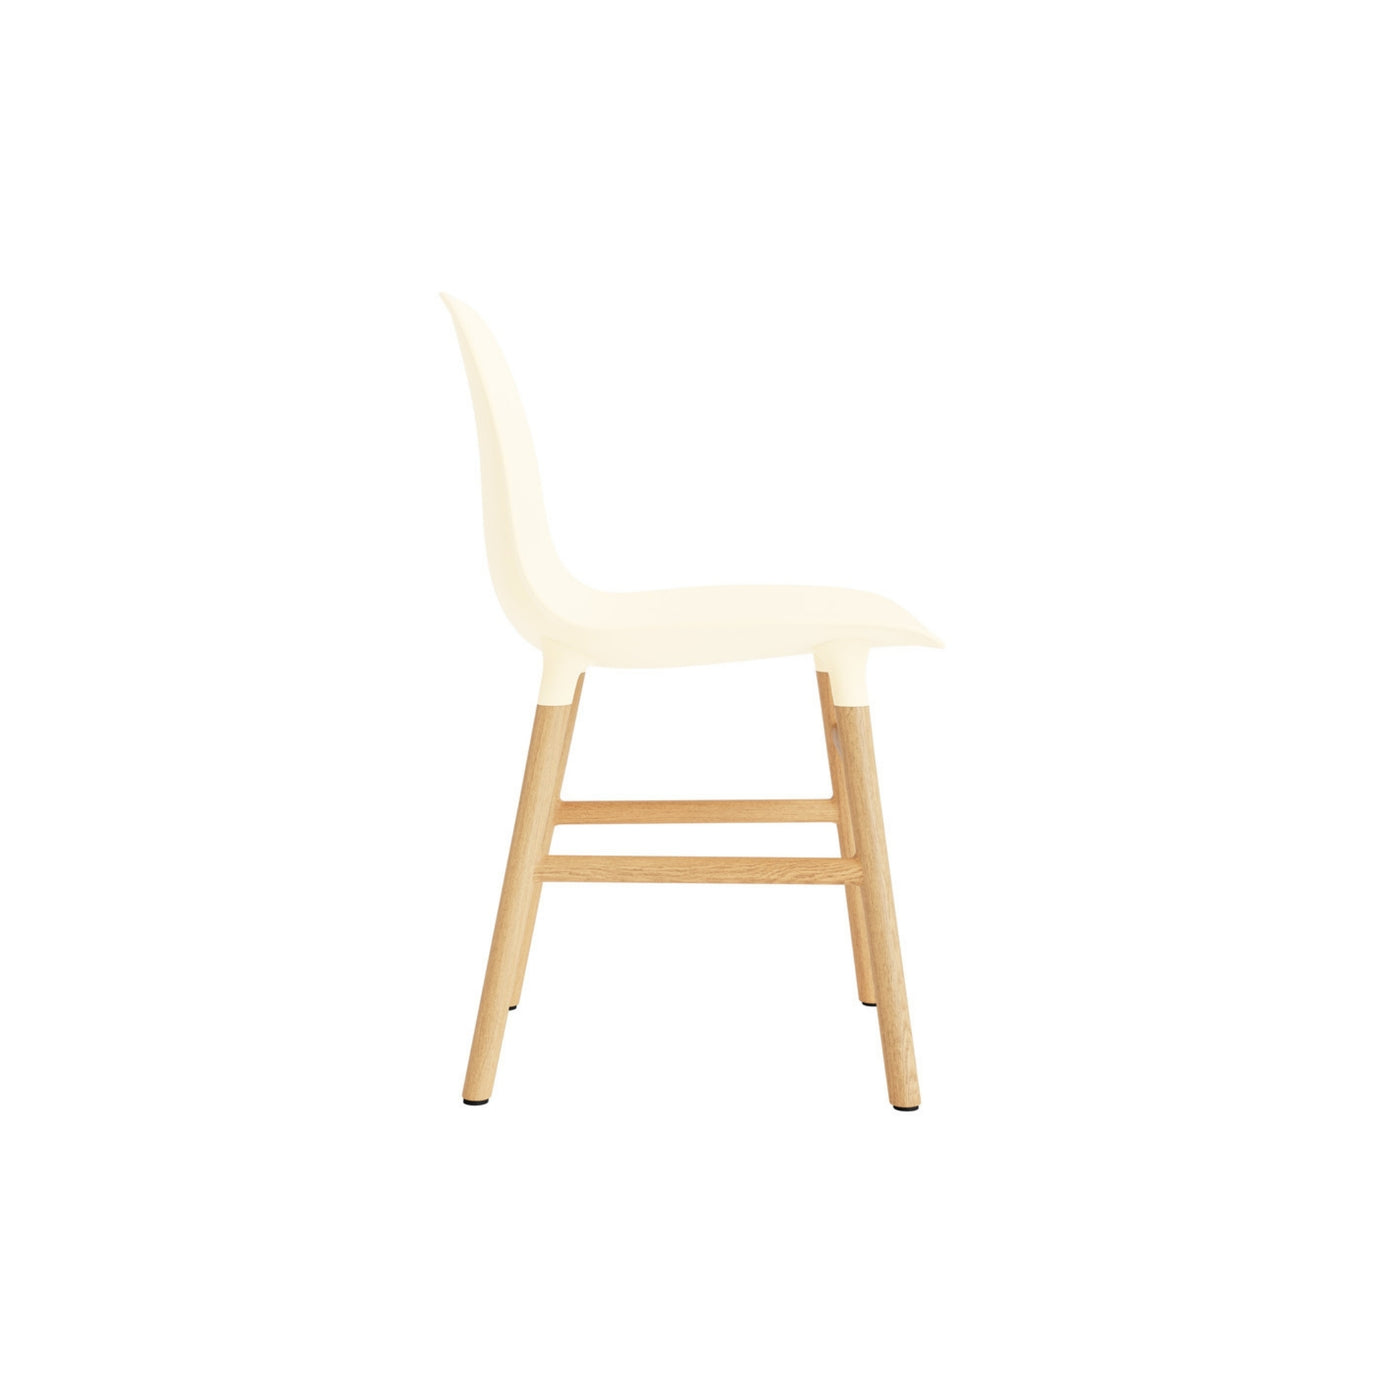 Normann Copenhagen Form Chair at someday designs. #colour_cream